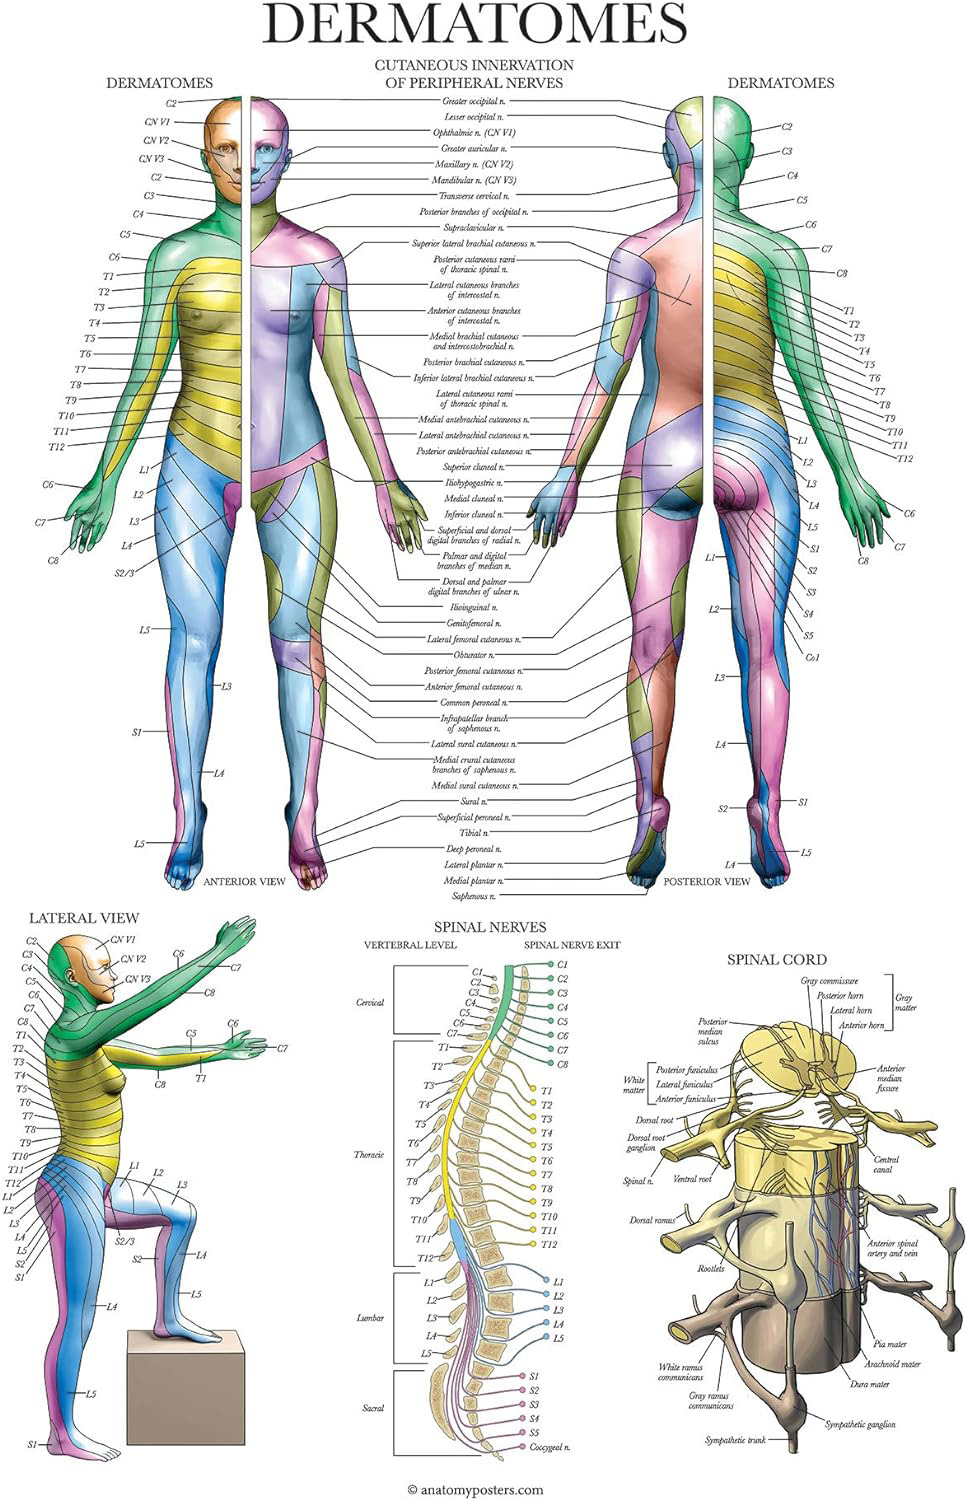 Dermatomes & Nervous System Anatomical Chart - Dermatomes Anatomy Poster